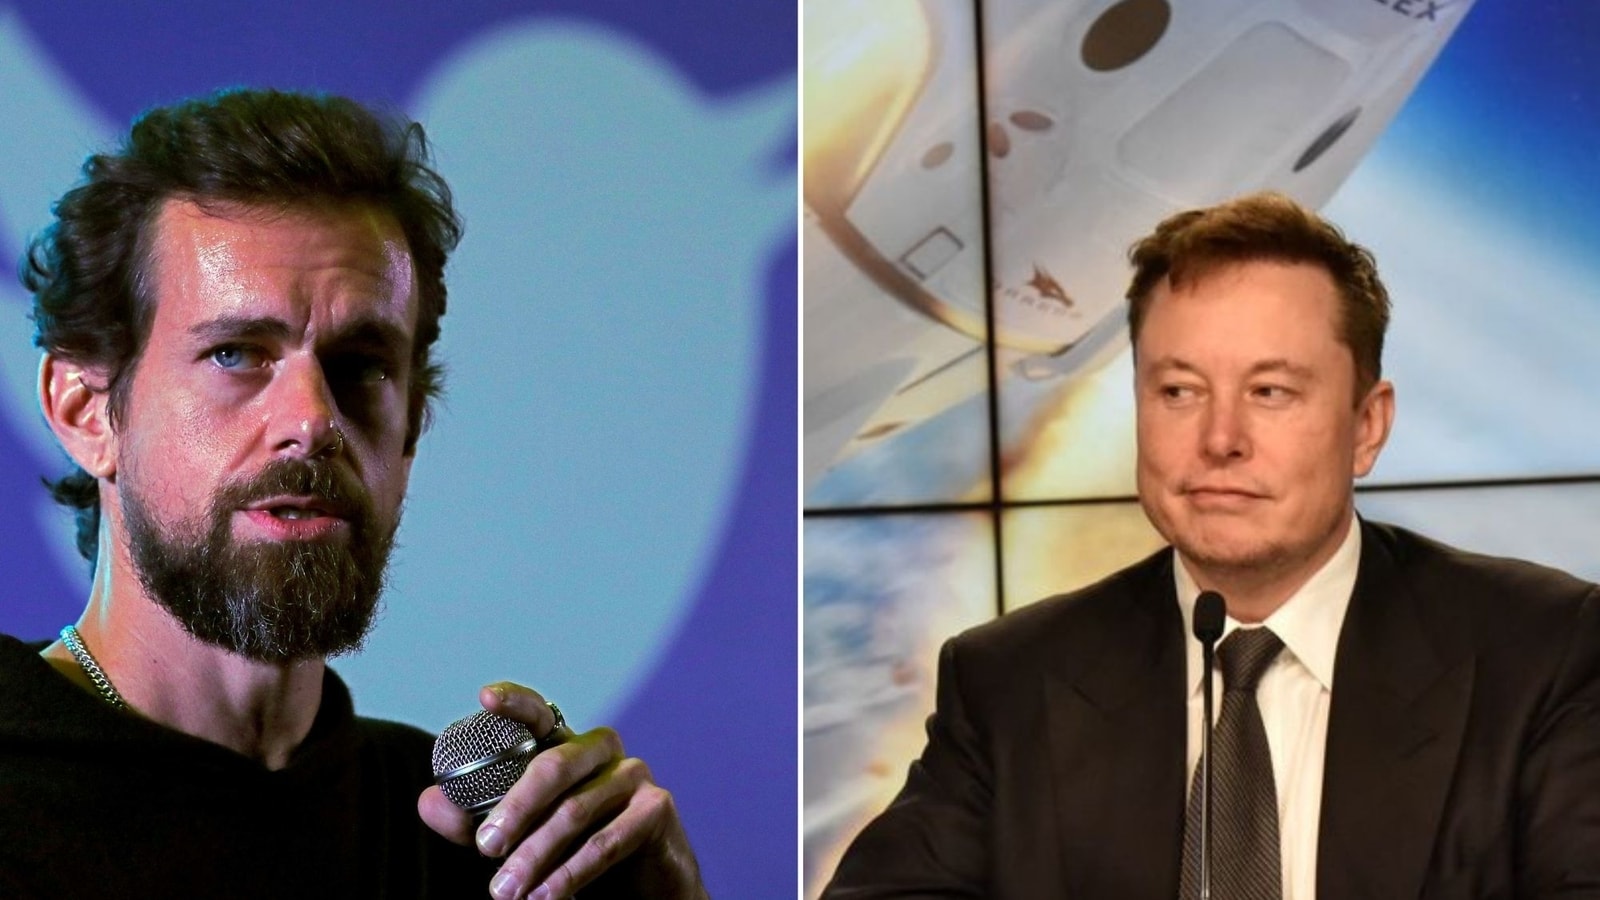 Tesla CEO Elon Musk and Twitter CEO Jack Dorsey